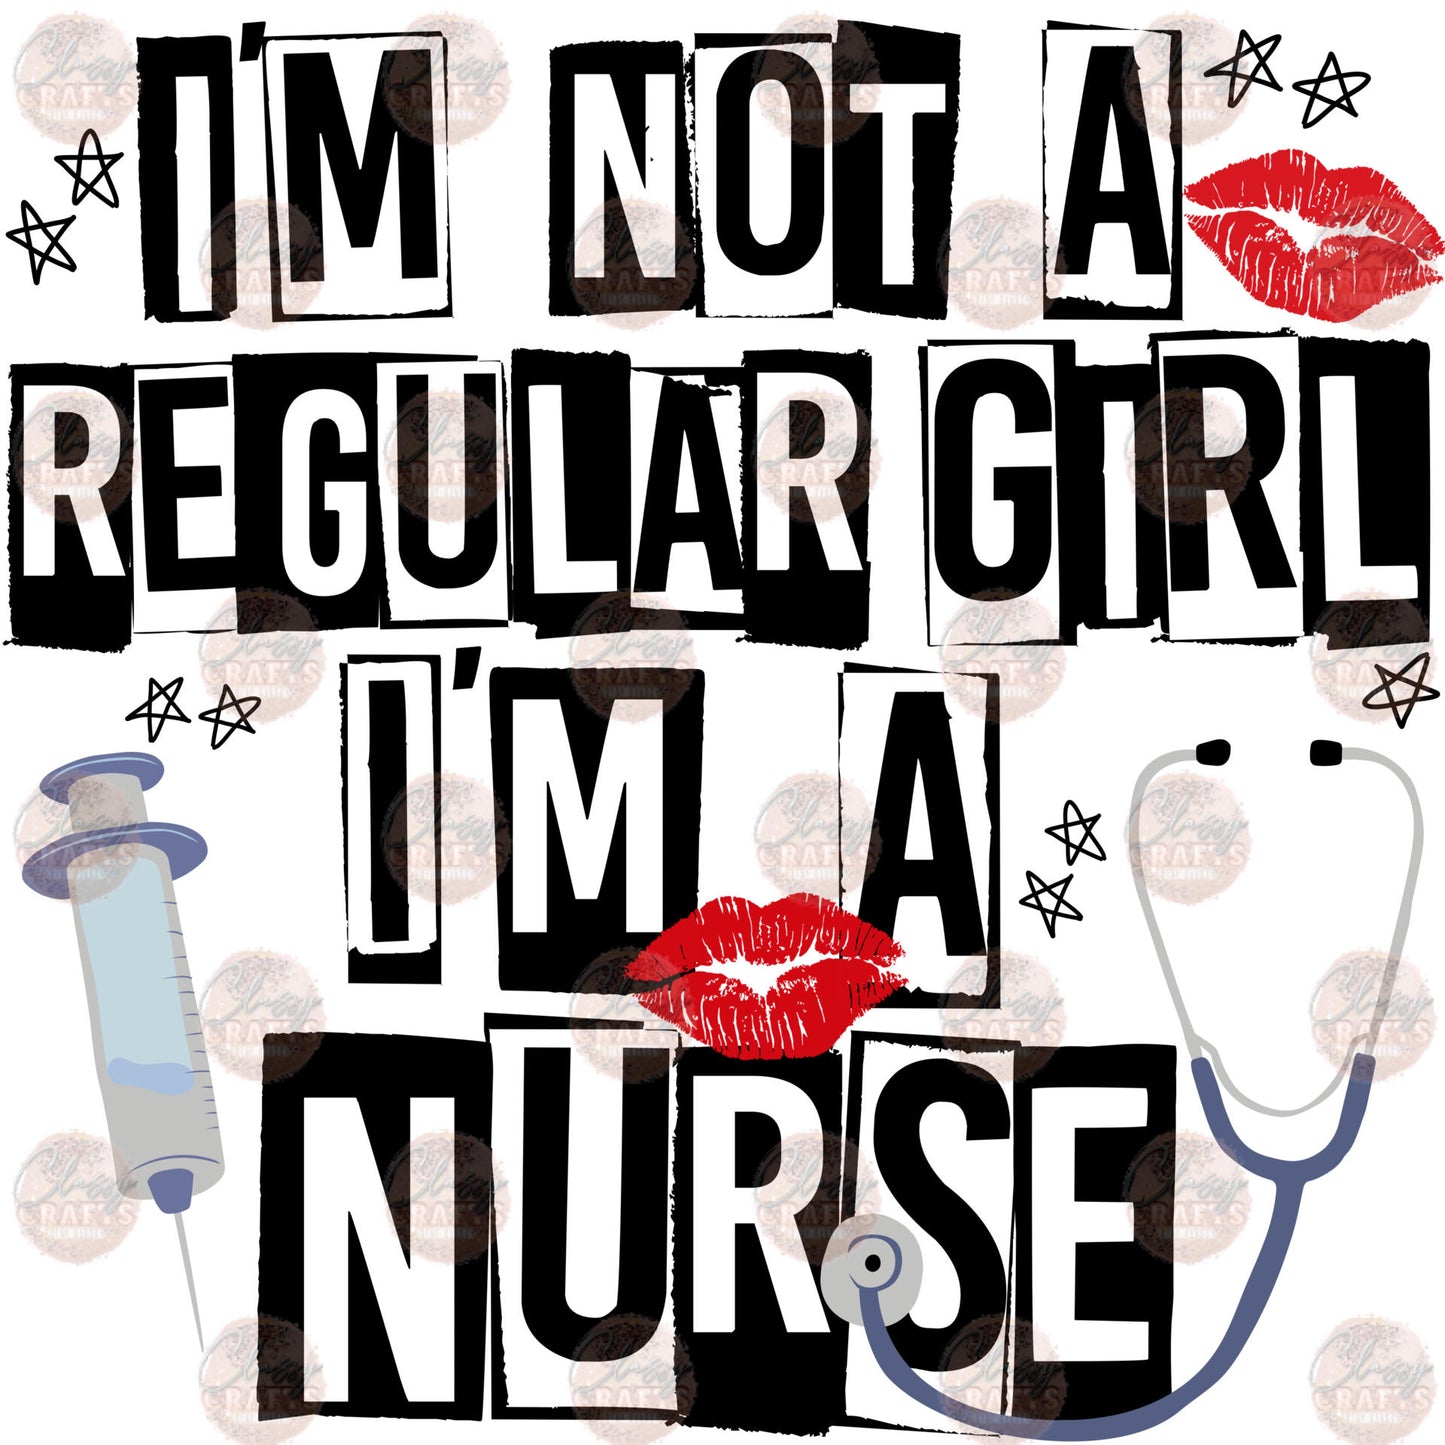 I'm Not A Regular Girl I'm A Nurse - Sublimation Transfer